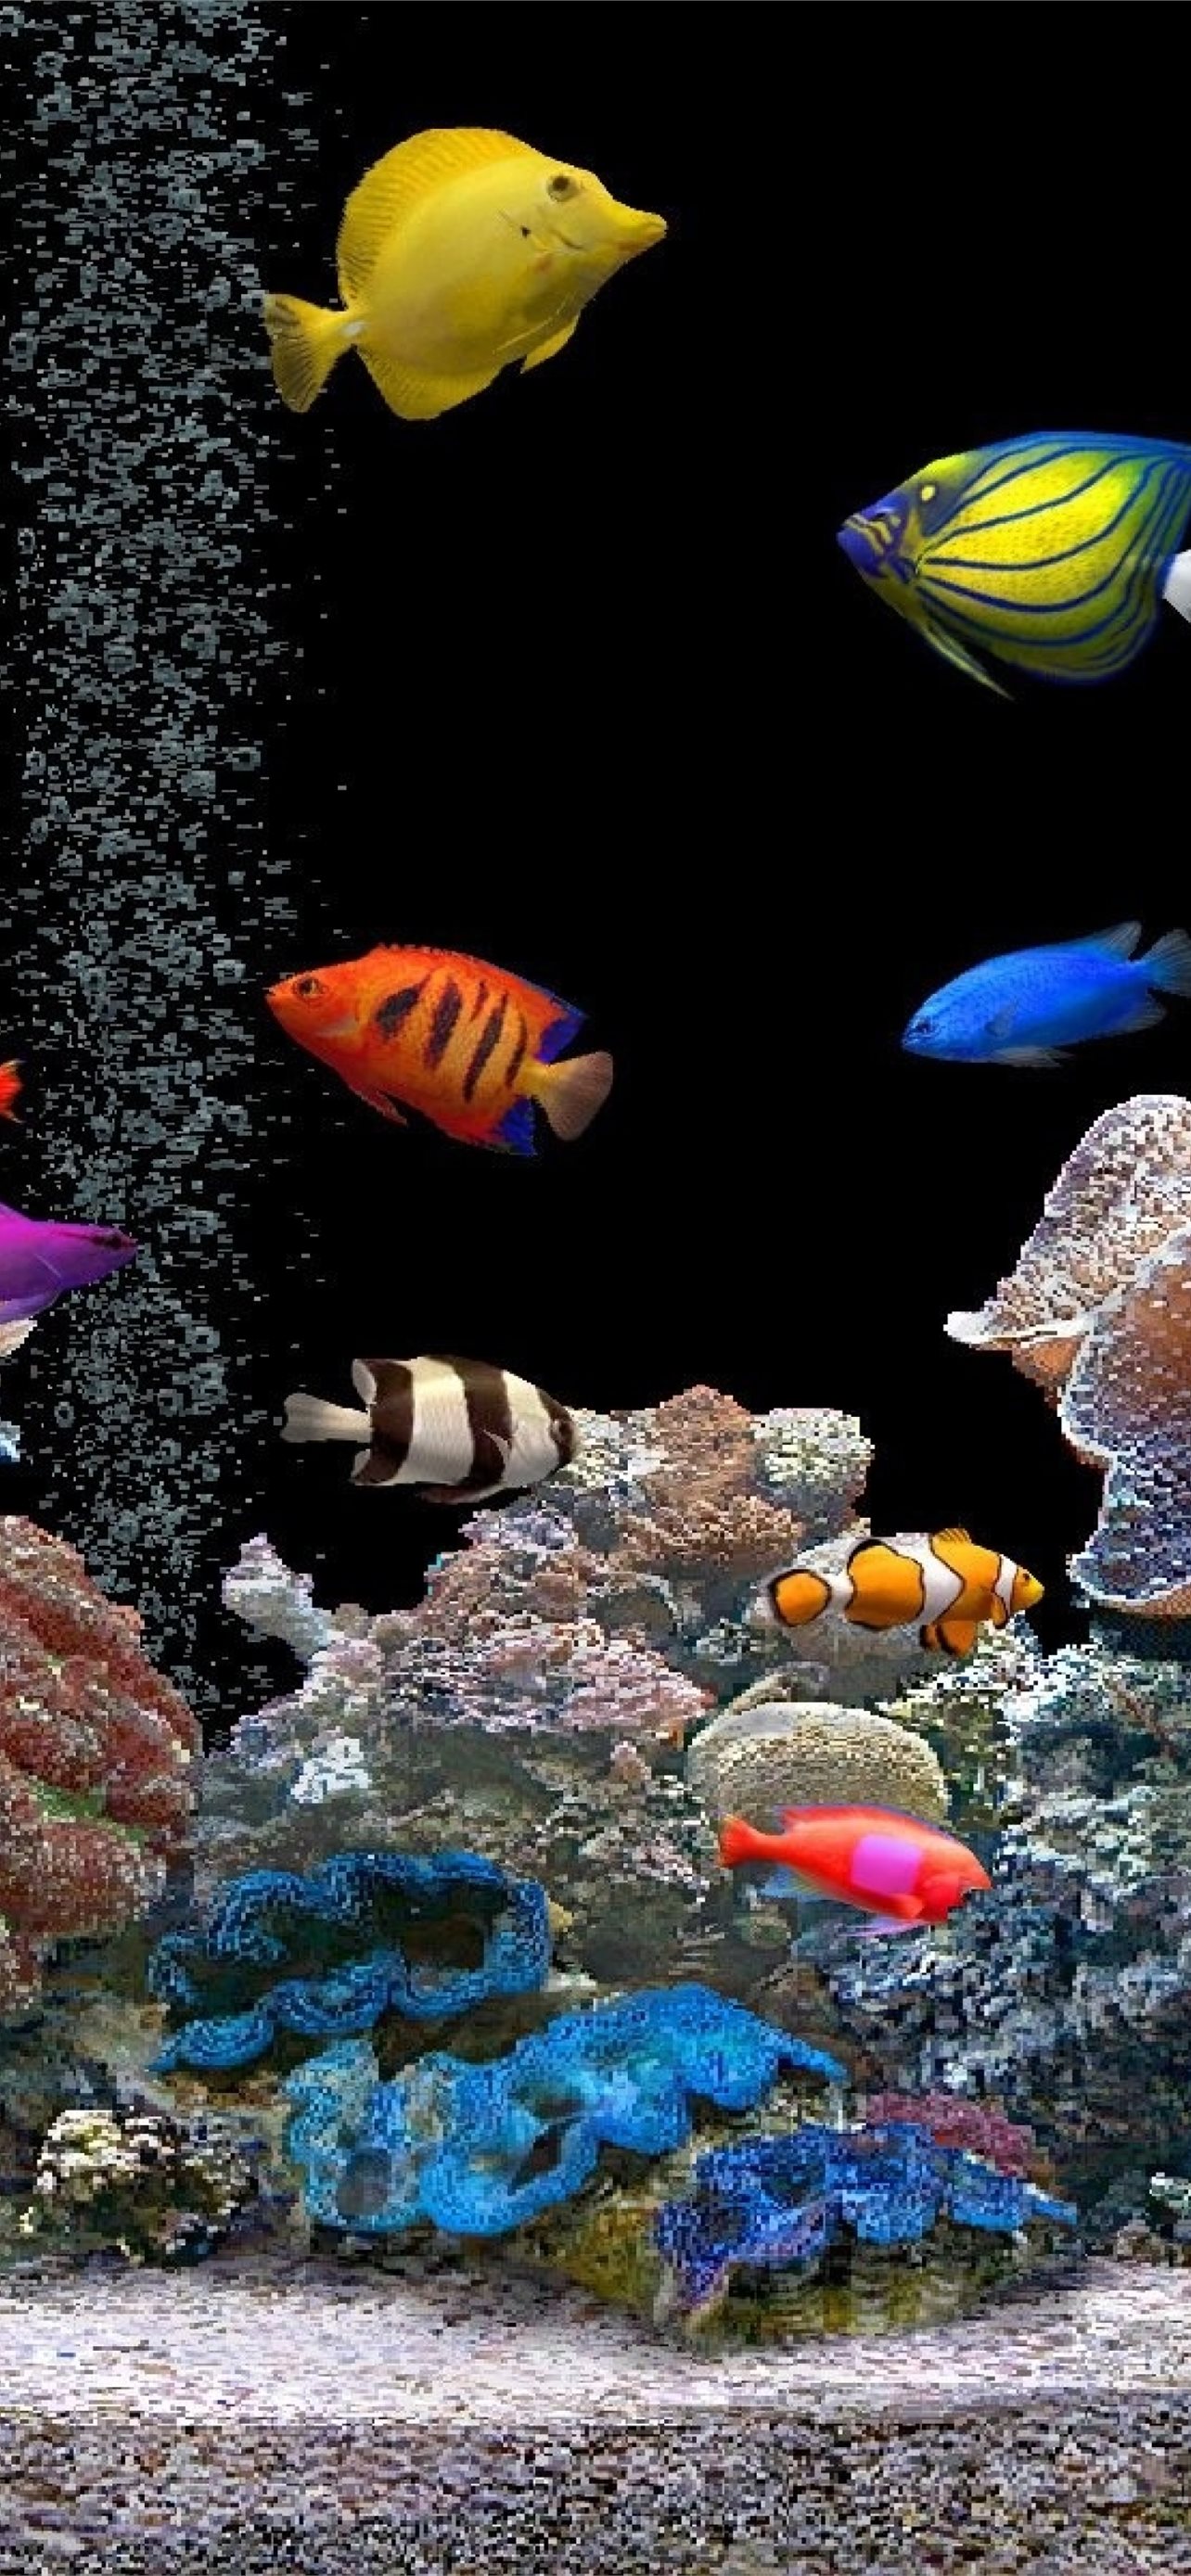 750 Aquarium Pictures HD  Download Free Images on Unsplash